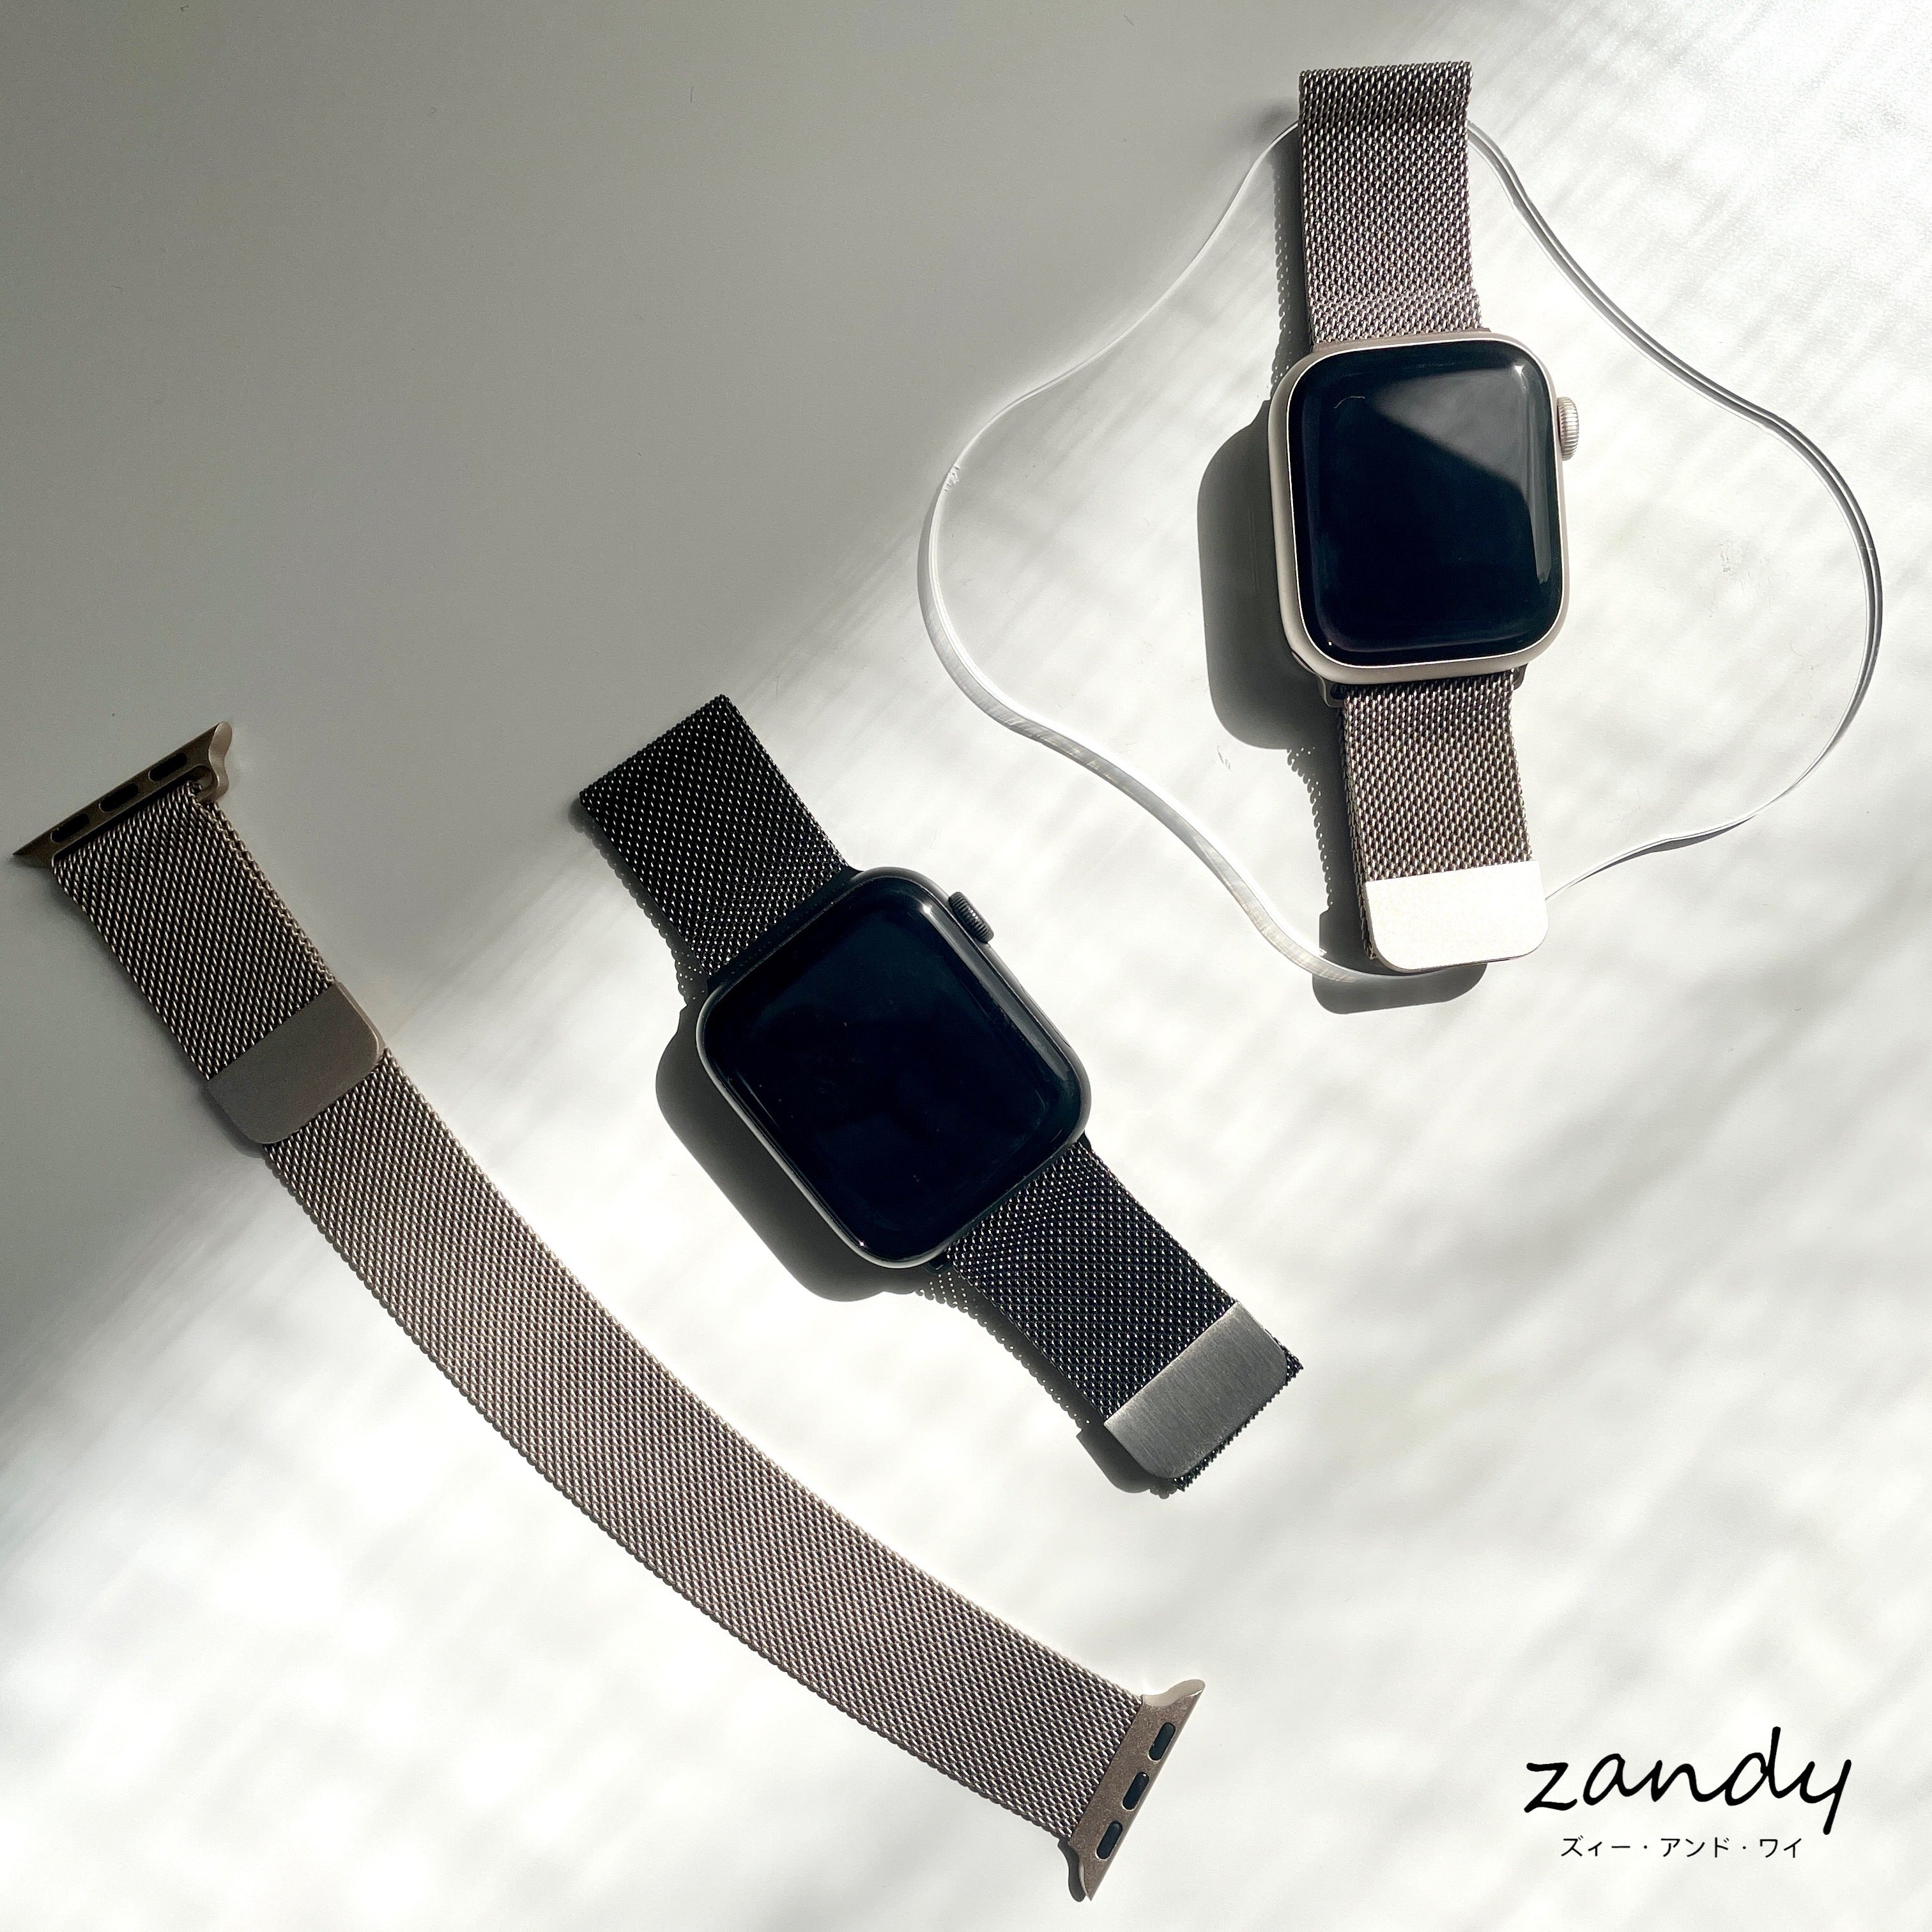 Applewatch series4 40mm ミラネーゼメンズ | zoidubai.com